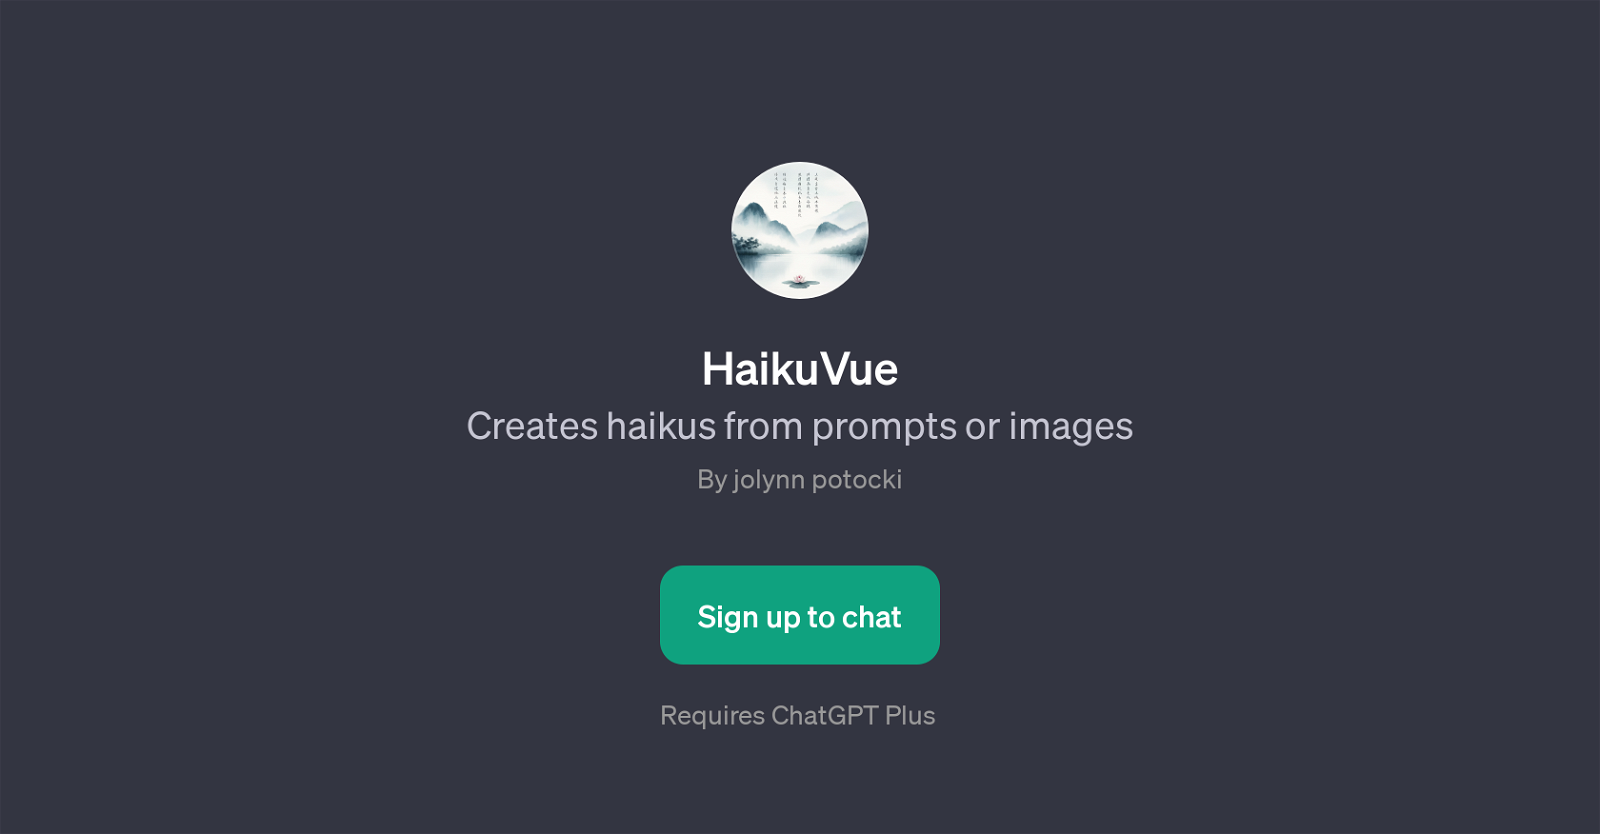 HaikuVue website